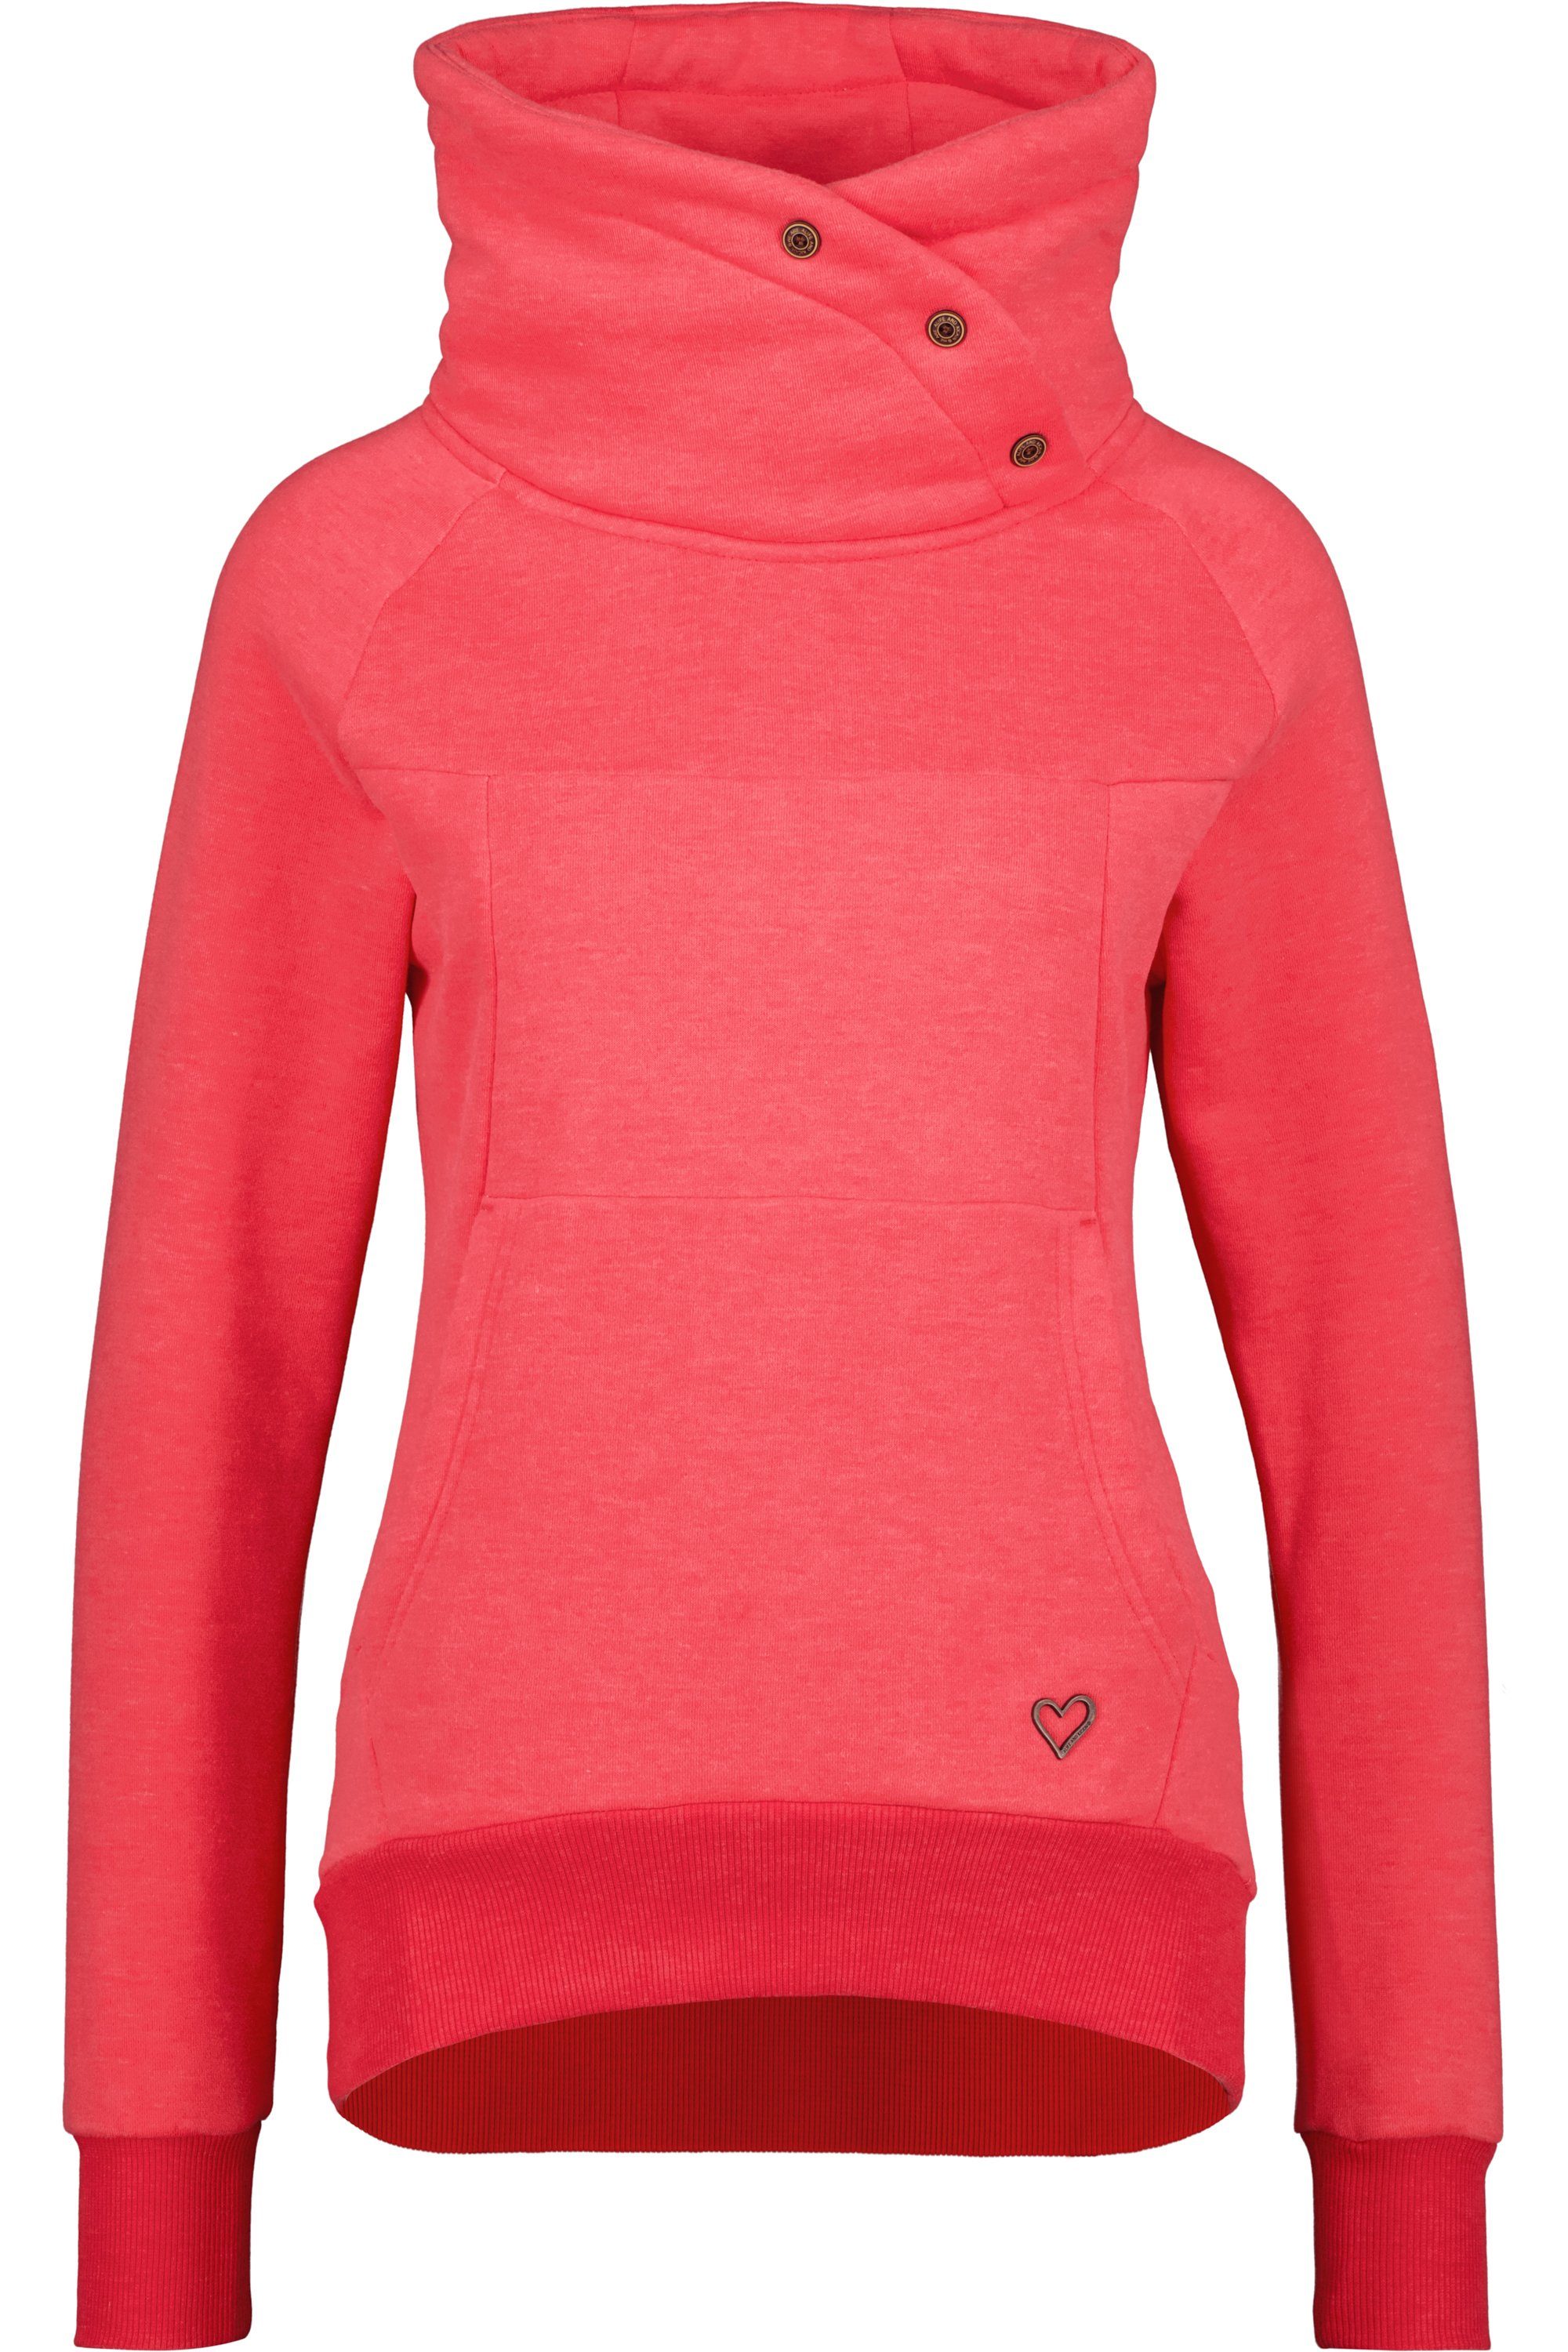 Sweatshirt Sweatshirt coral A melange Kickin VioletAK Damen Alife & Sweat